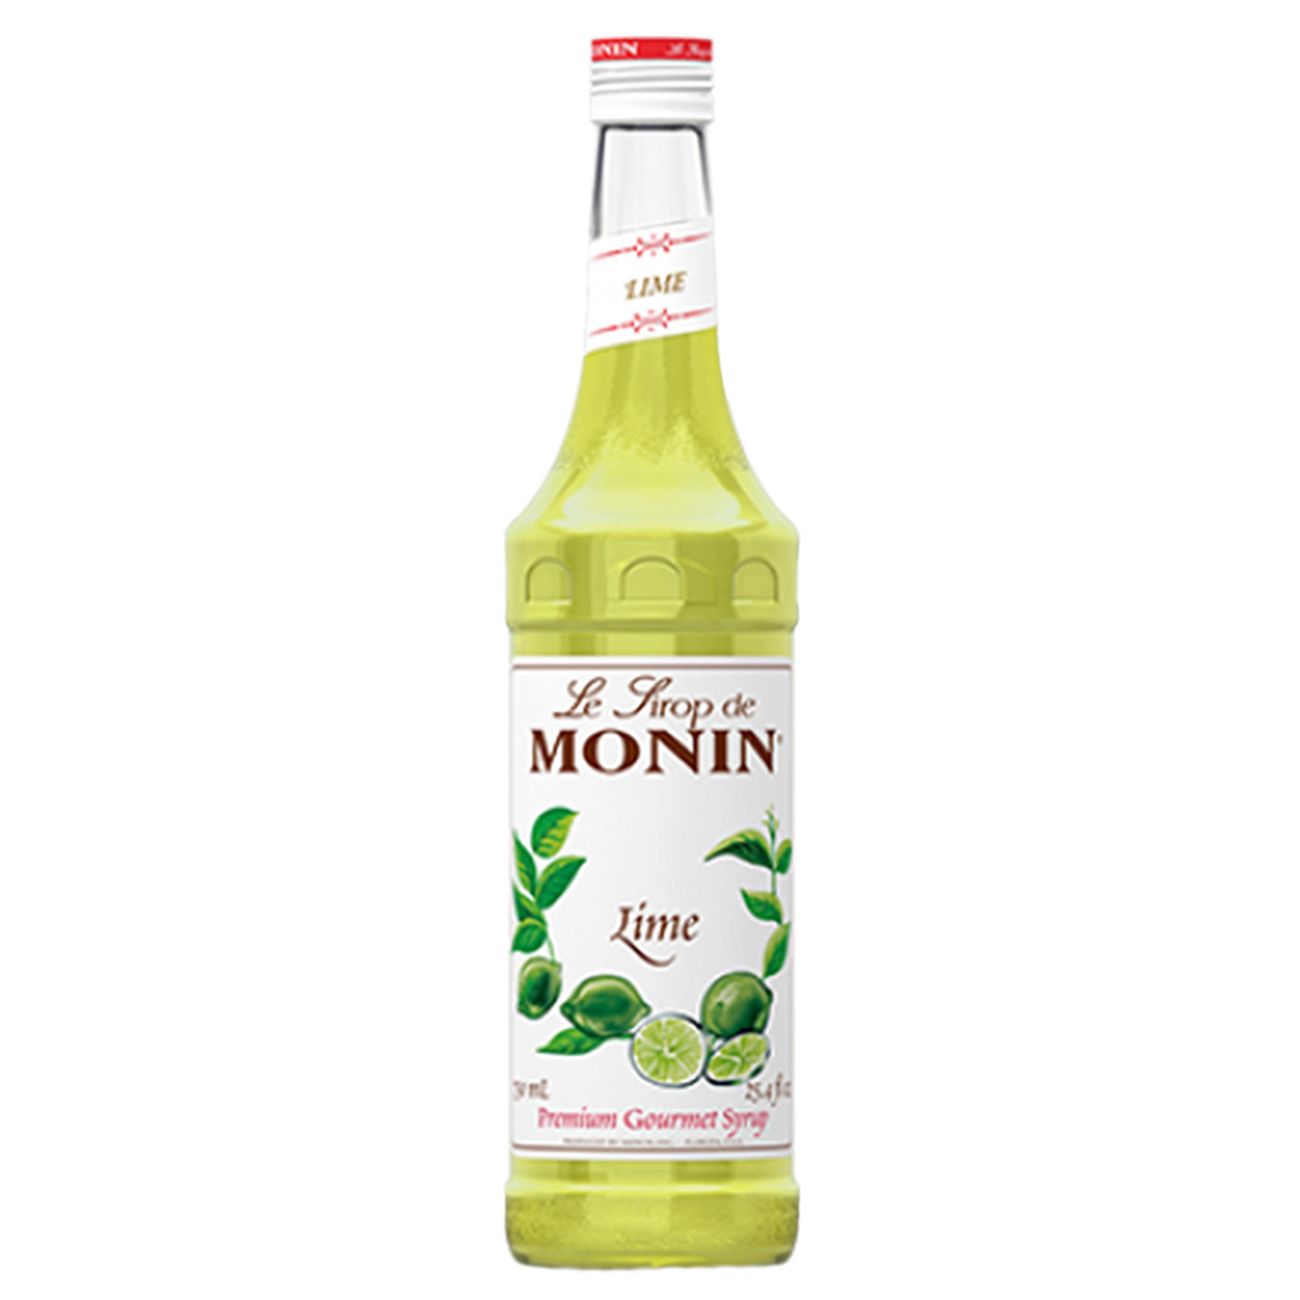 monin-lime-drinkmix-1